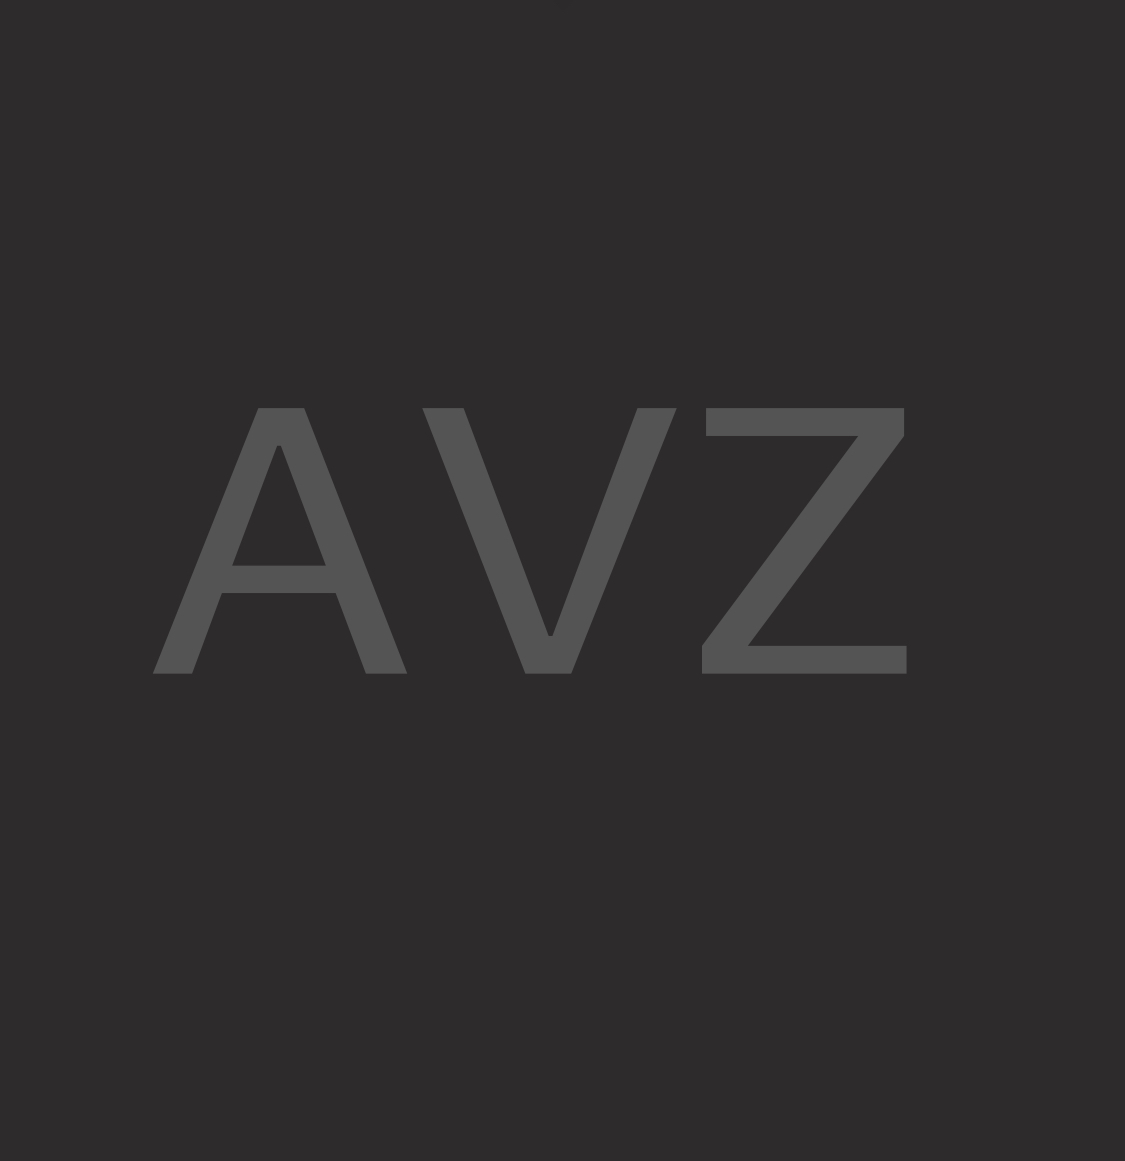 AVZ Agency